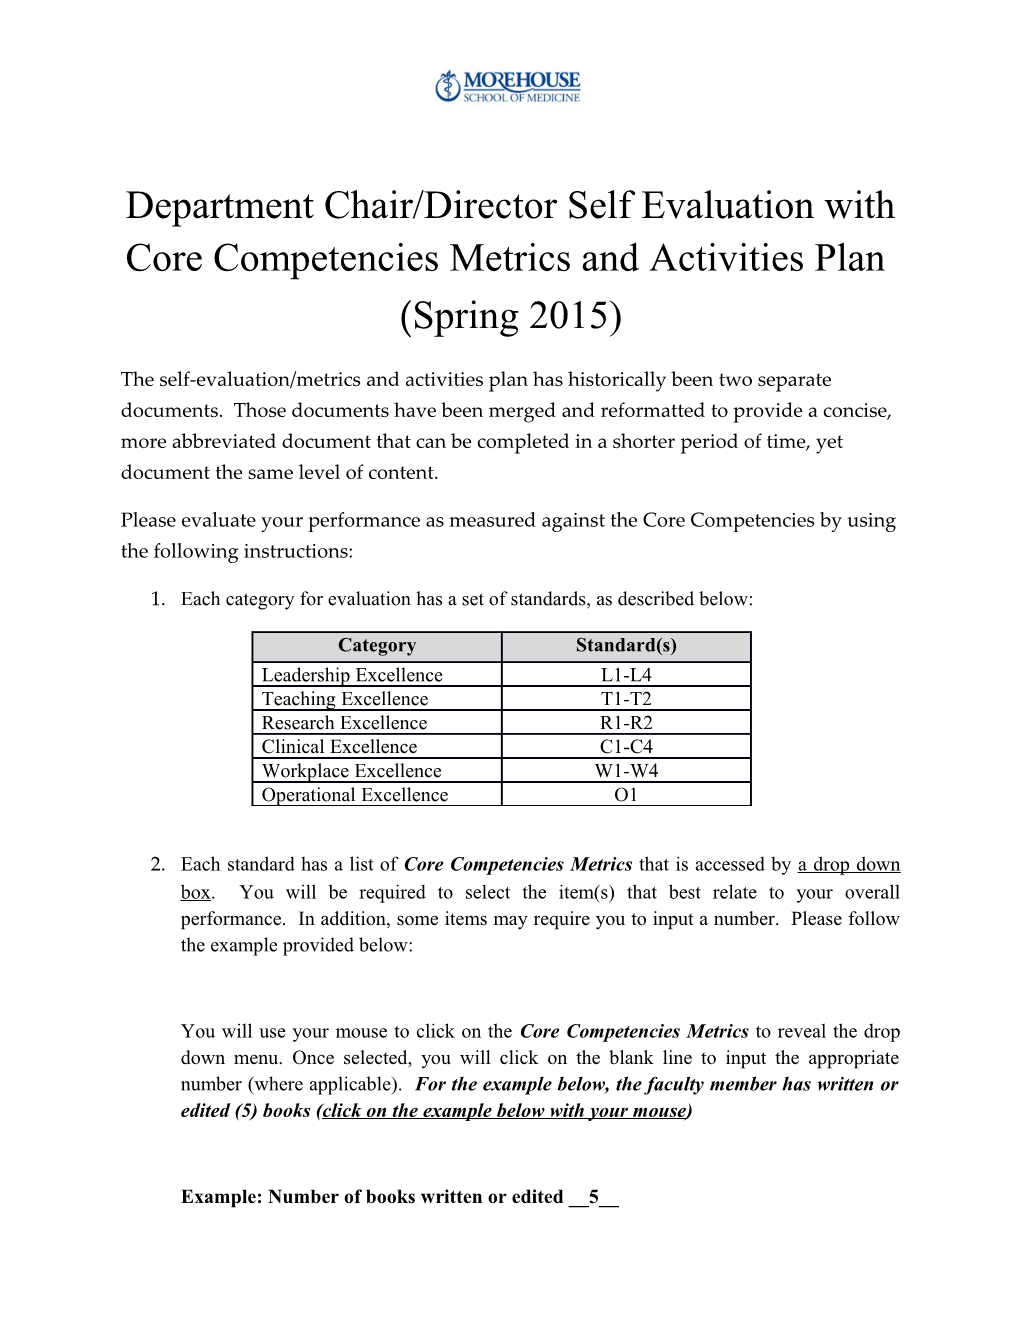 Department Chair/Director Self Evaluation/Metrics and Activities Plan 2015